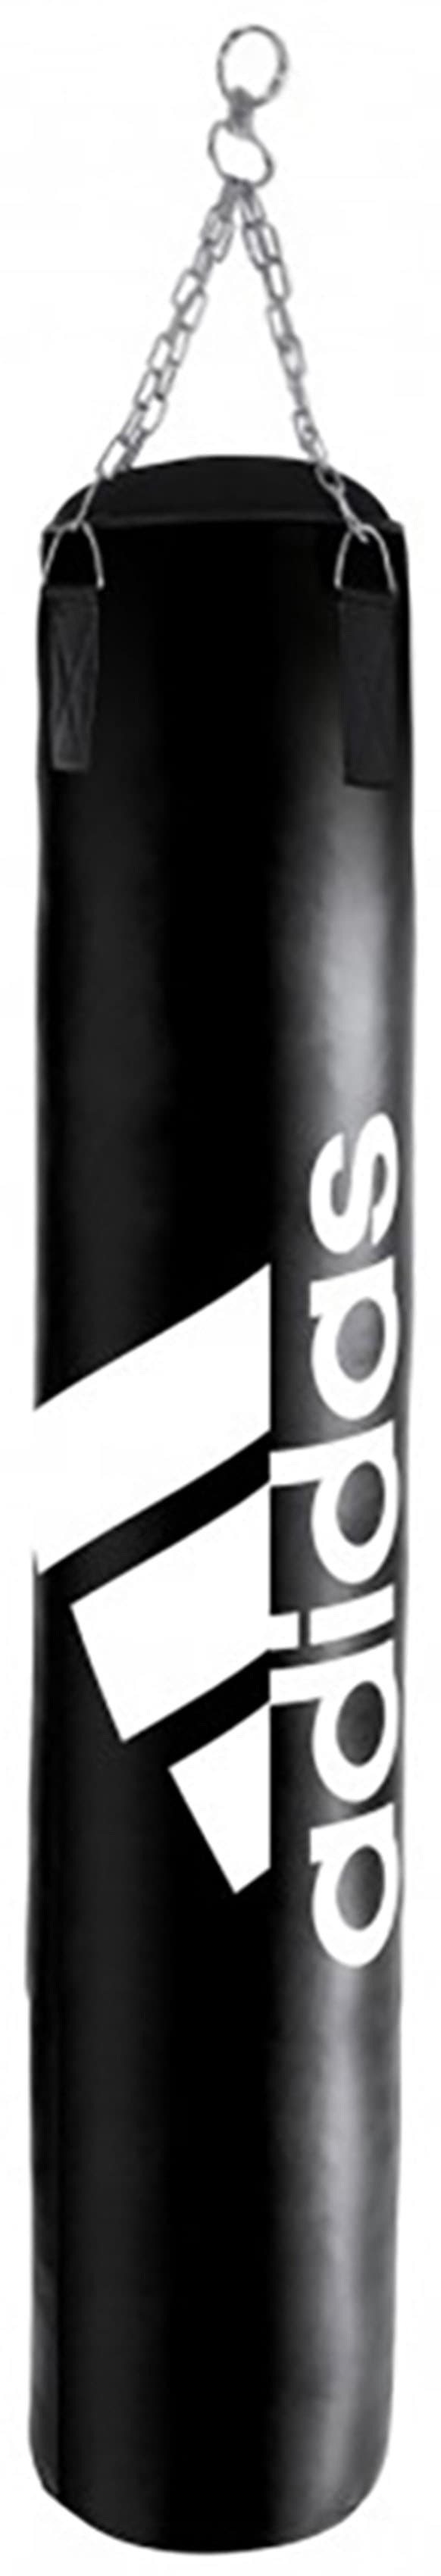 adidas Unisex - Erwachsene Boxing Bag Classic Boxsack, Schwarz, 90 cm